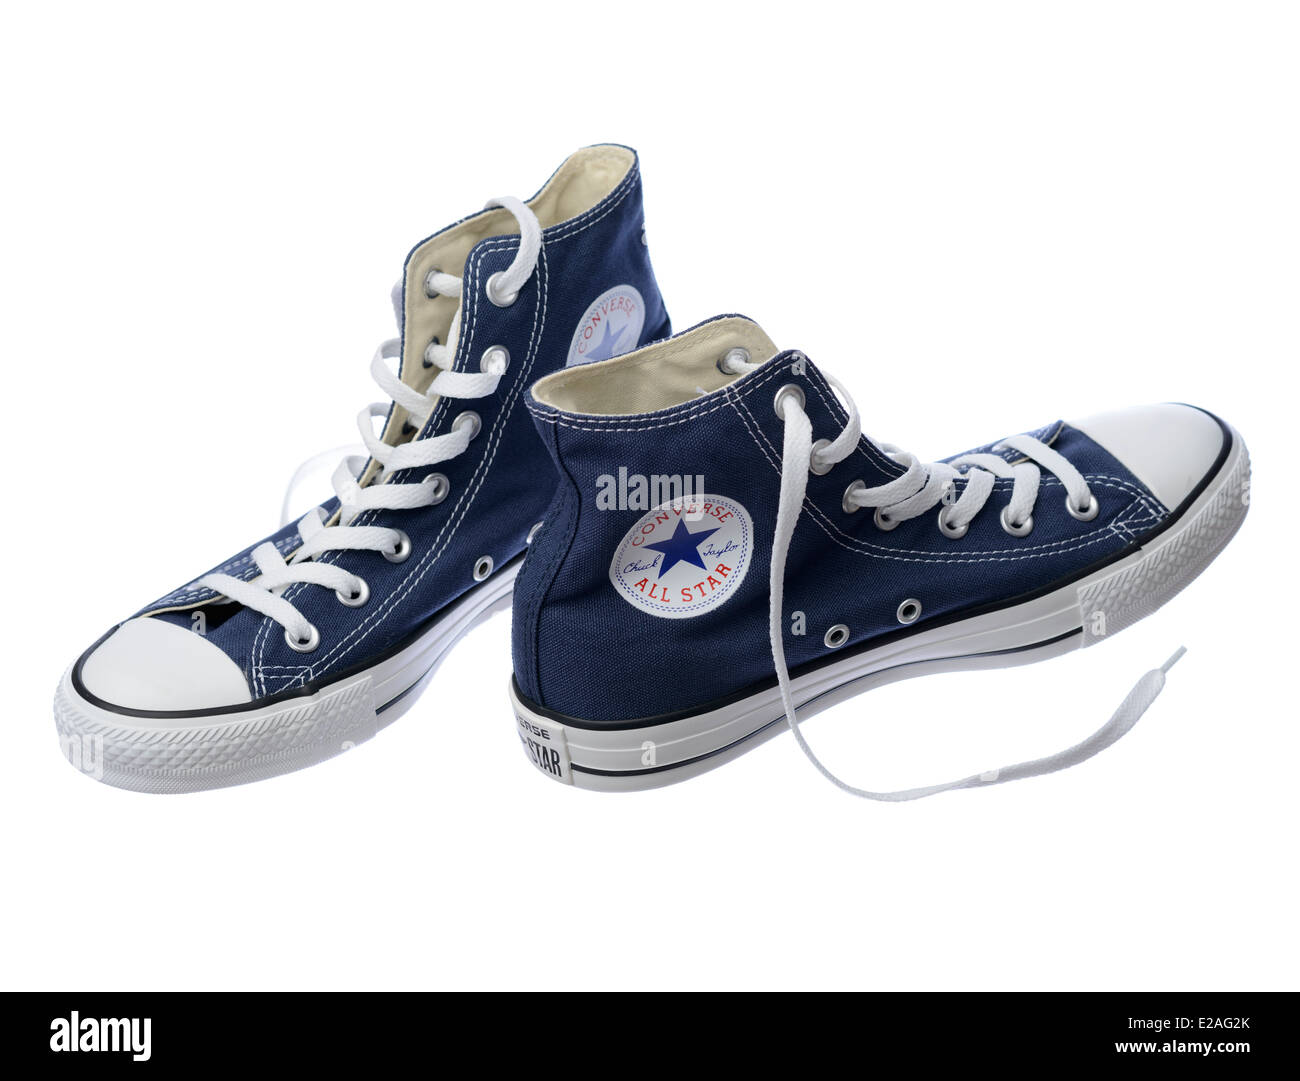 Blue Converse Chuck Taylor All Star shoe pair Stock Photo